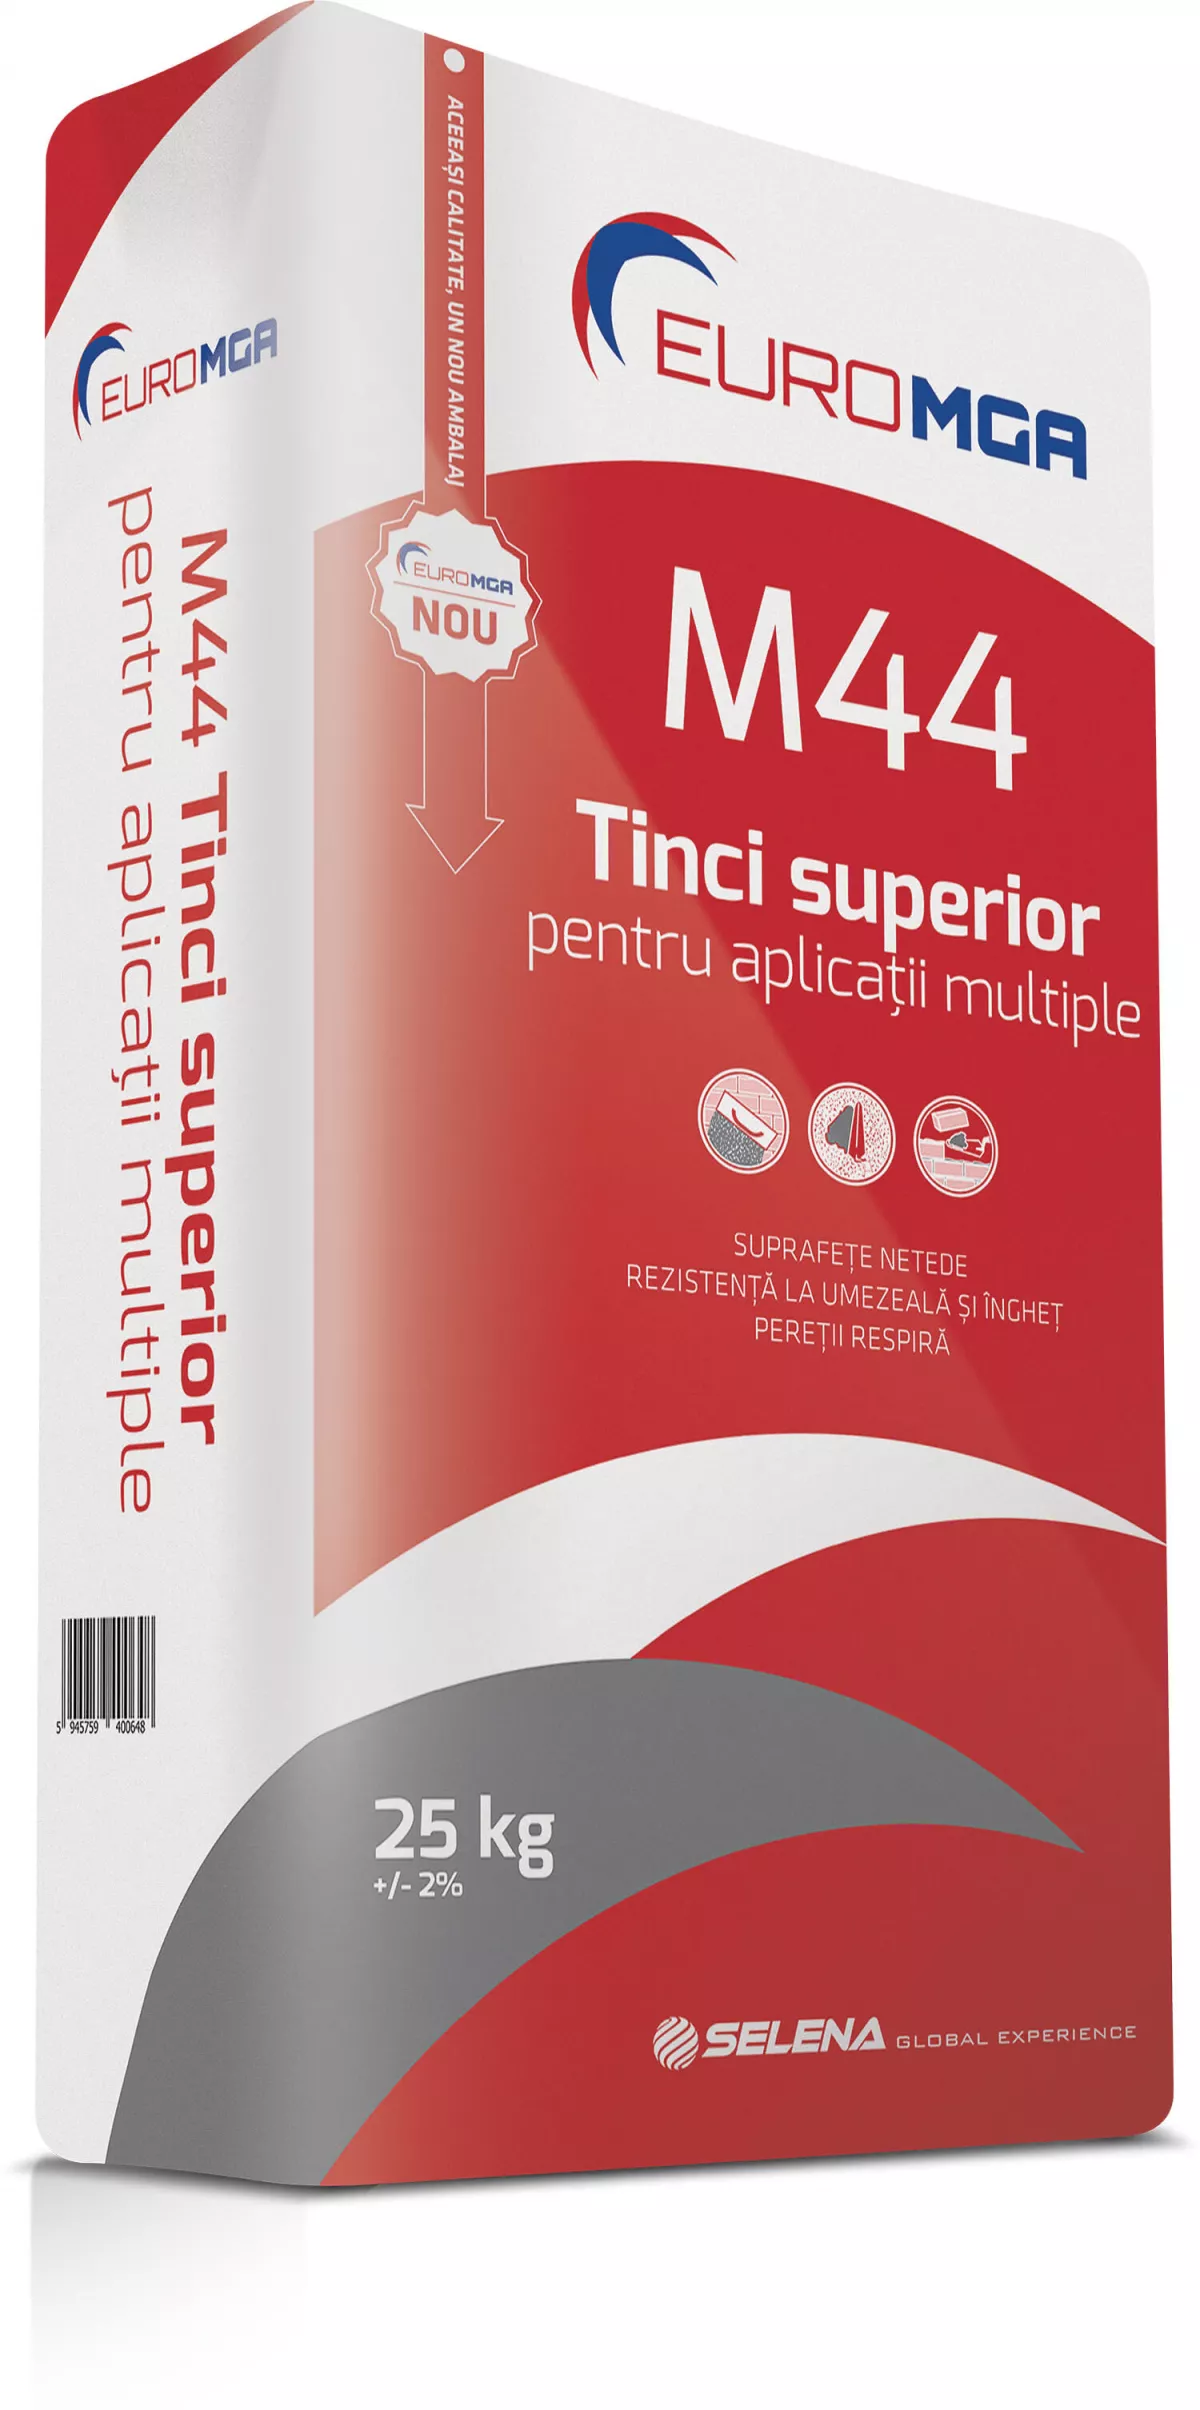 TINCI GRI SUPERIOR PENTRU APLICATII MULTIPLE EUROMGA M44 25KG, [],harmonydecor.ro